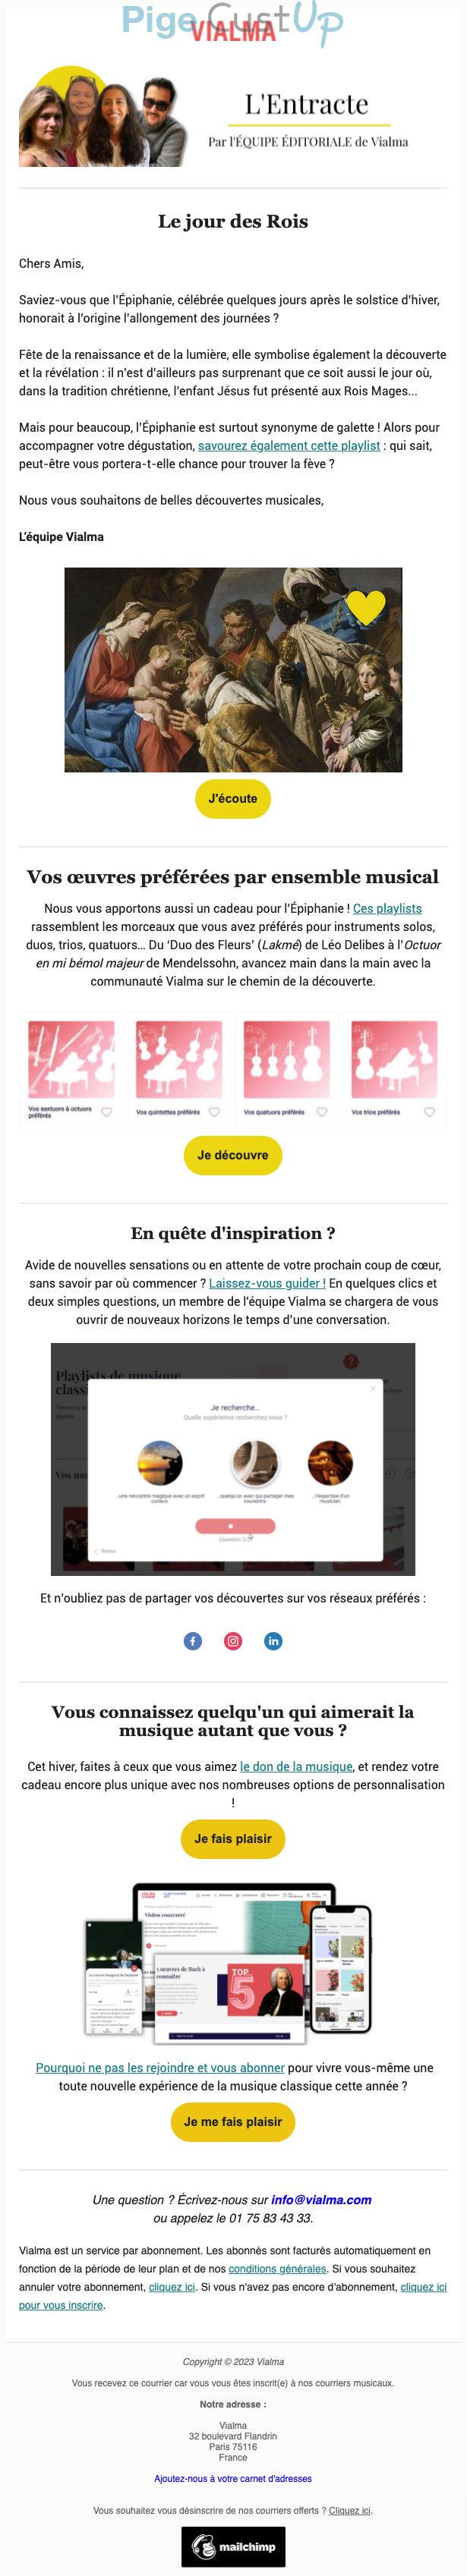 Exemple de Type de media  e-mailing - Vialma - Marketing relationnel - Calendaire (Noël, St valentin, Vœux, …) - Newsletter